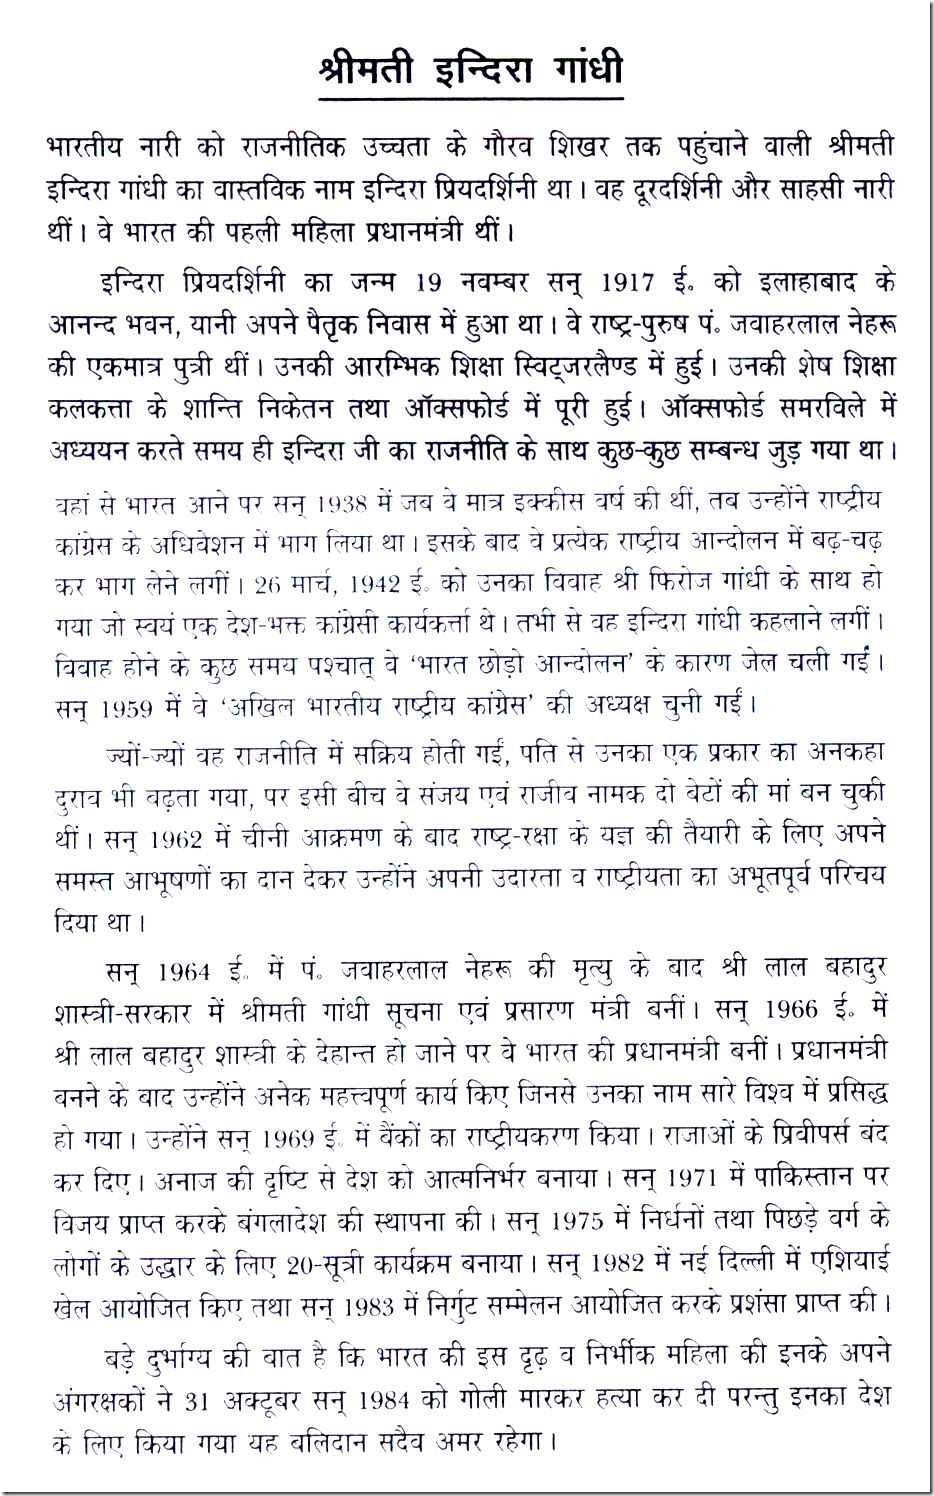 Indira gandhi hindi language essay